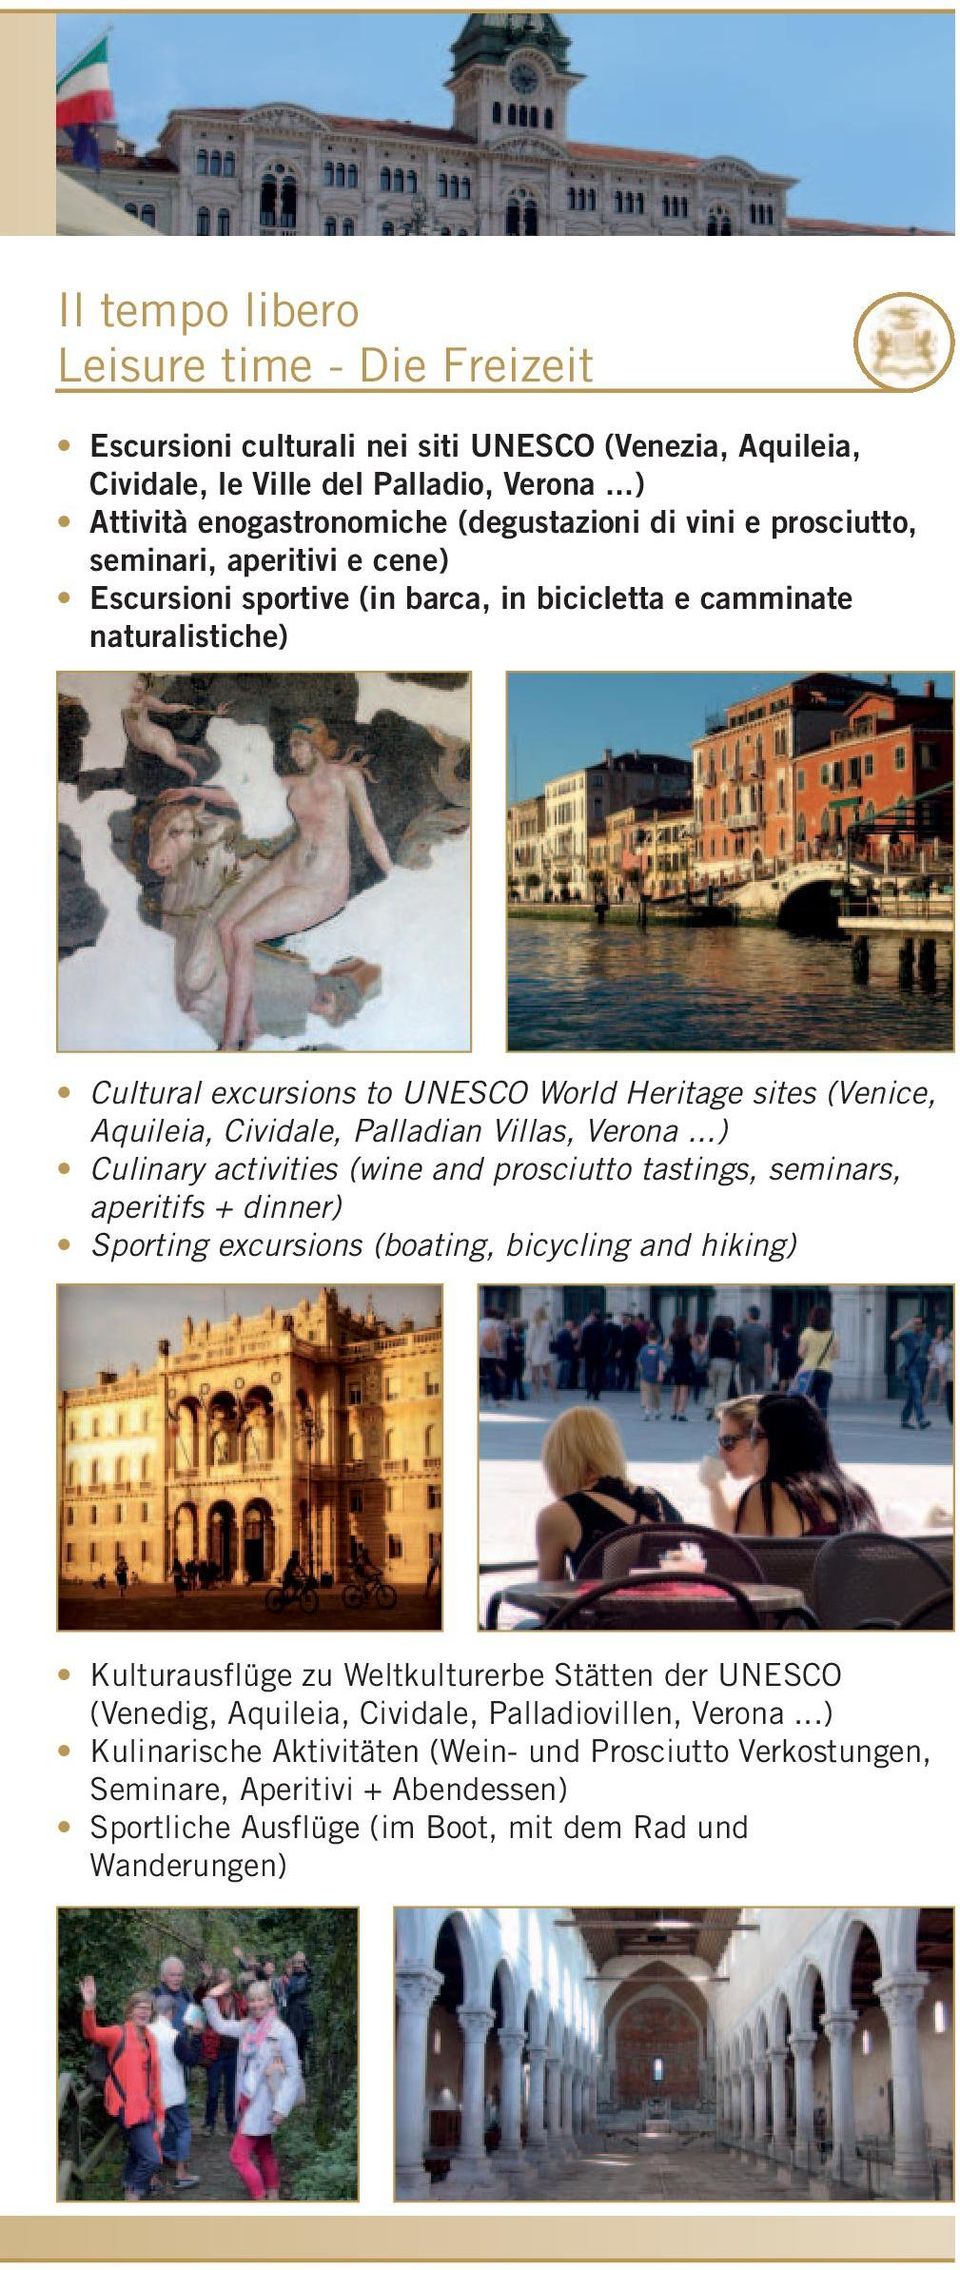 World Heritage sites (Venice, Aquileia, Cividale, Palladian Villas, Verona.